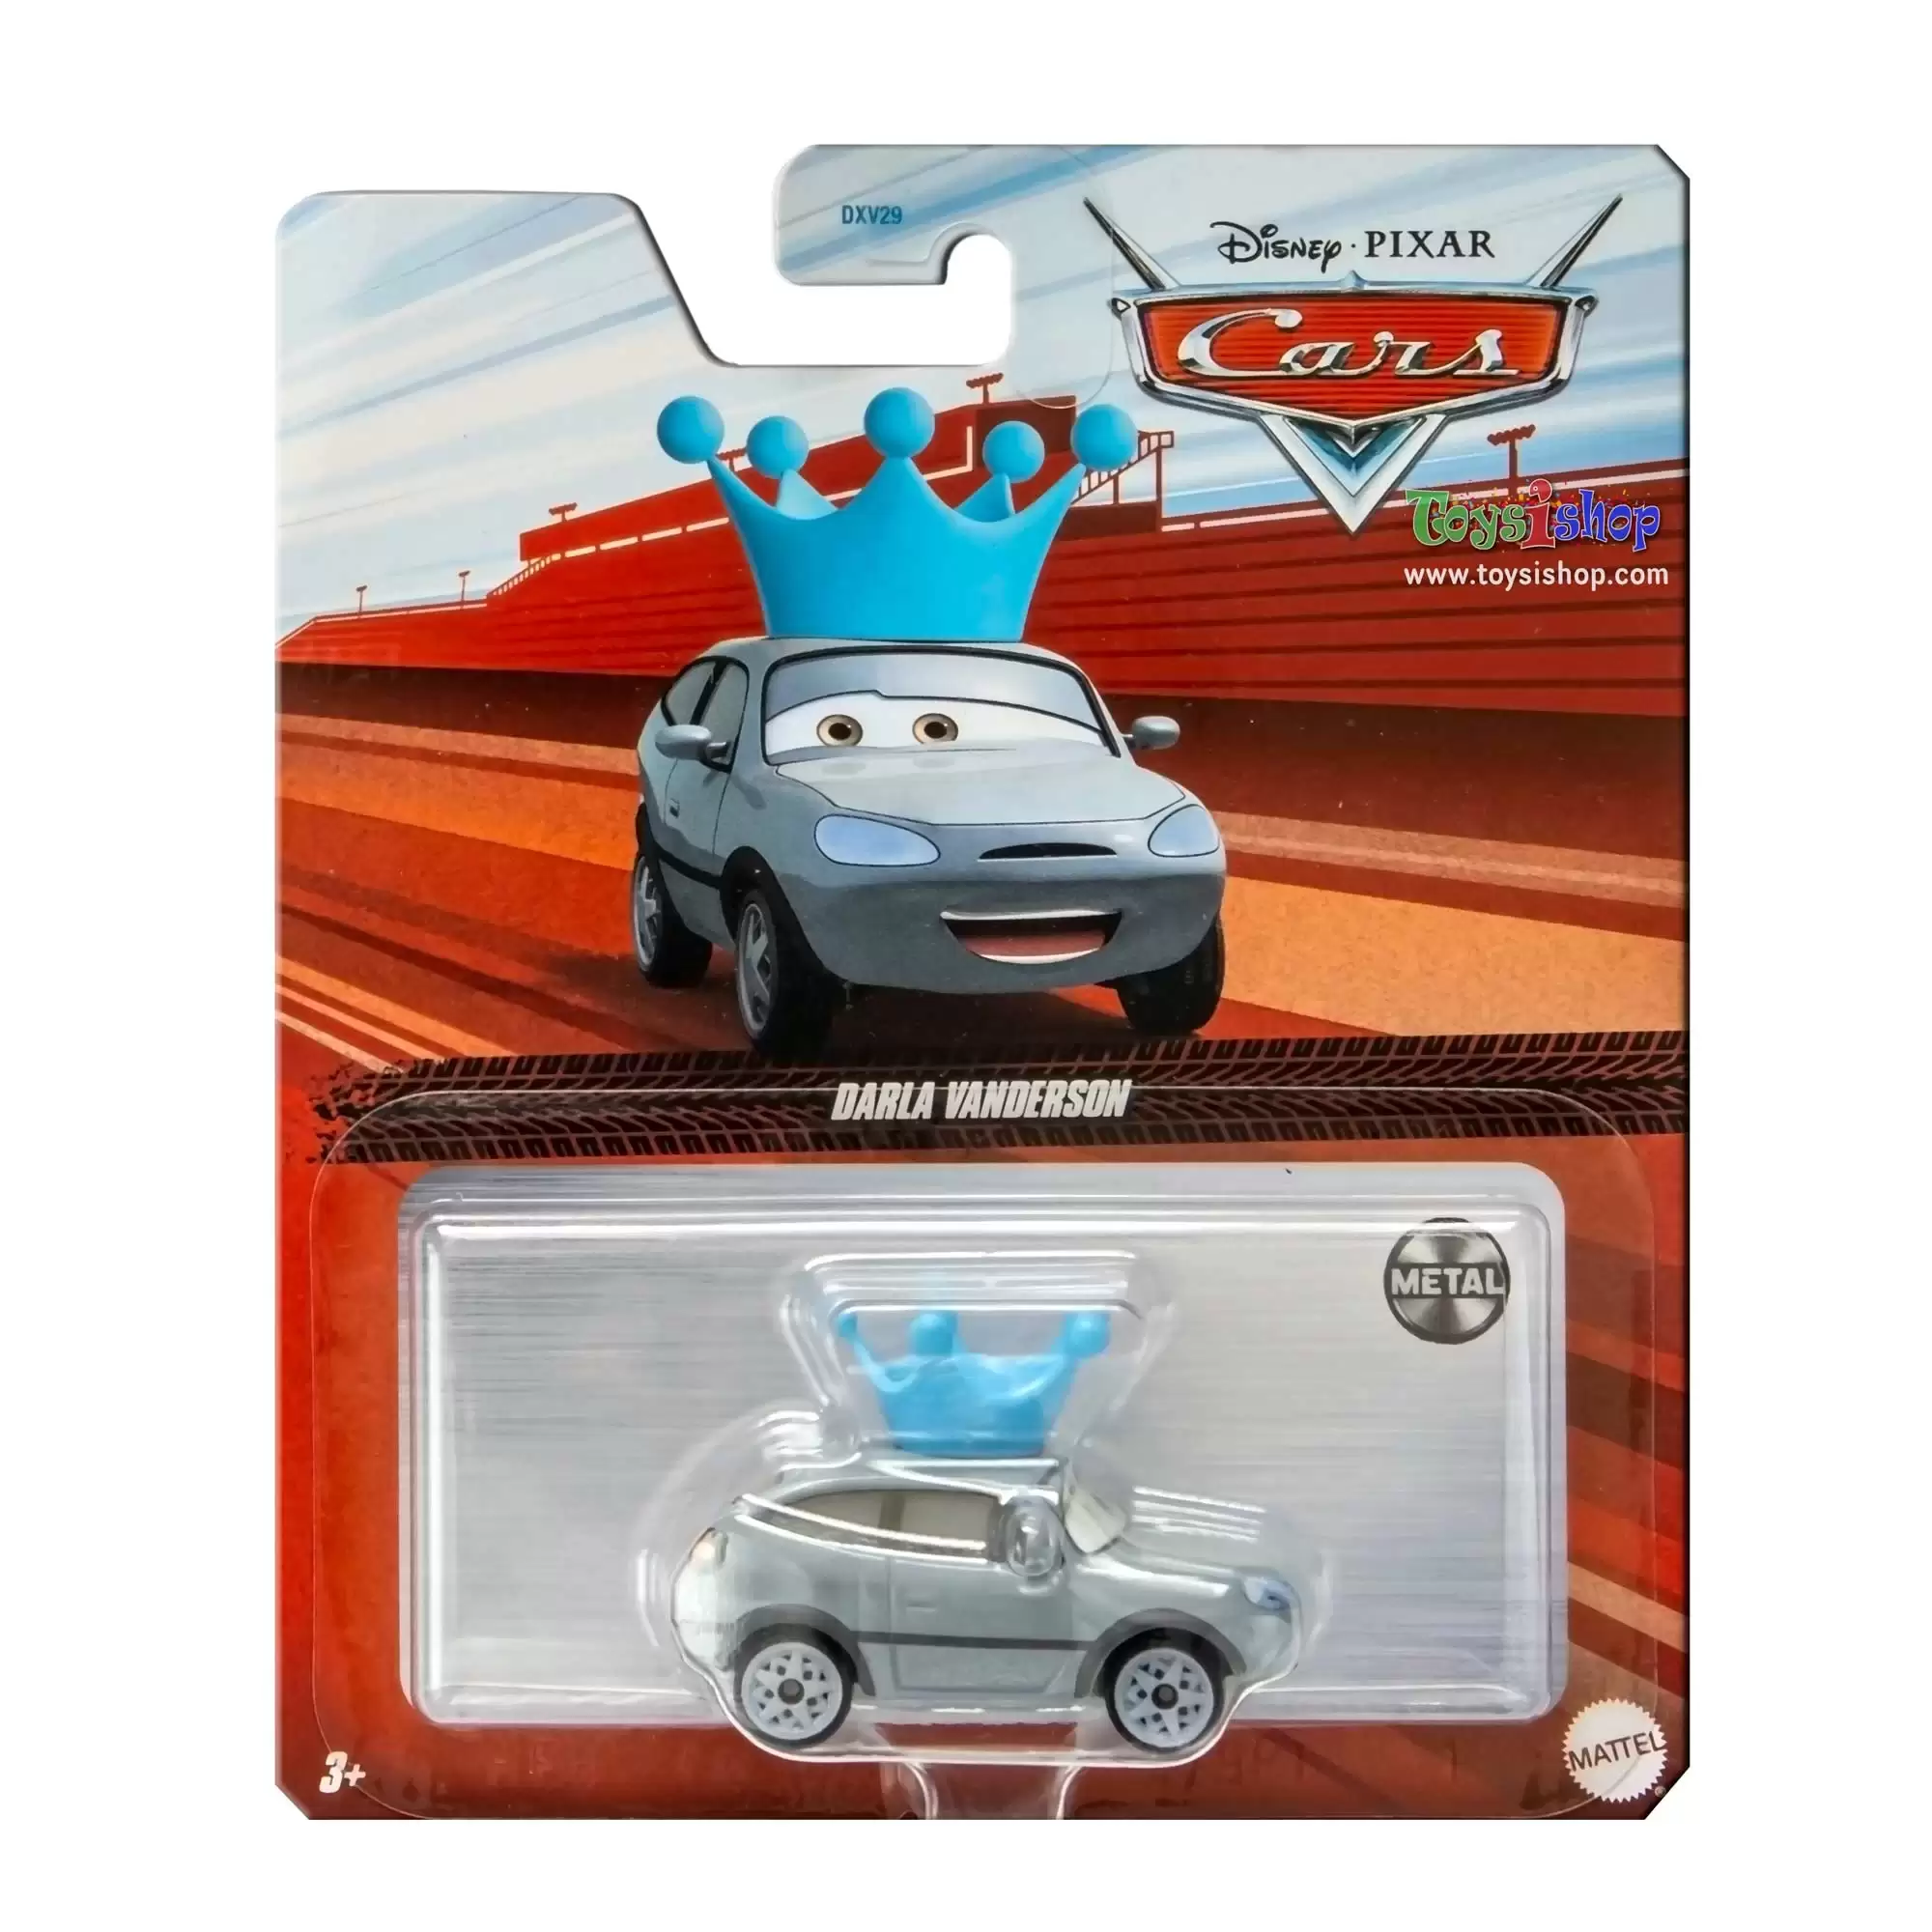 Disney Pixar Cars - Darla Vanderson